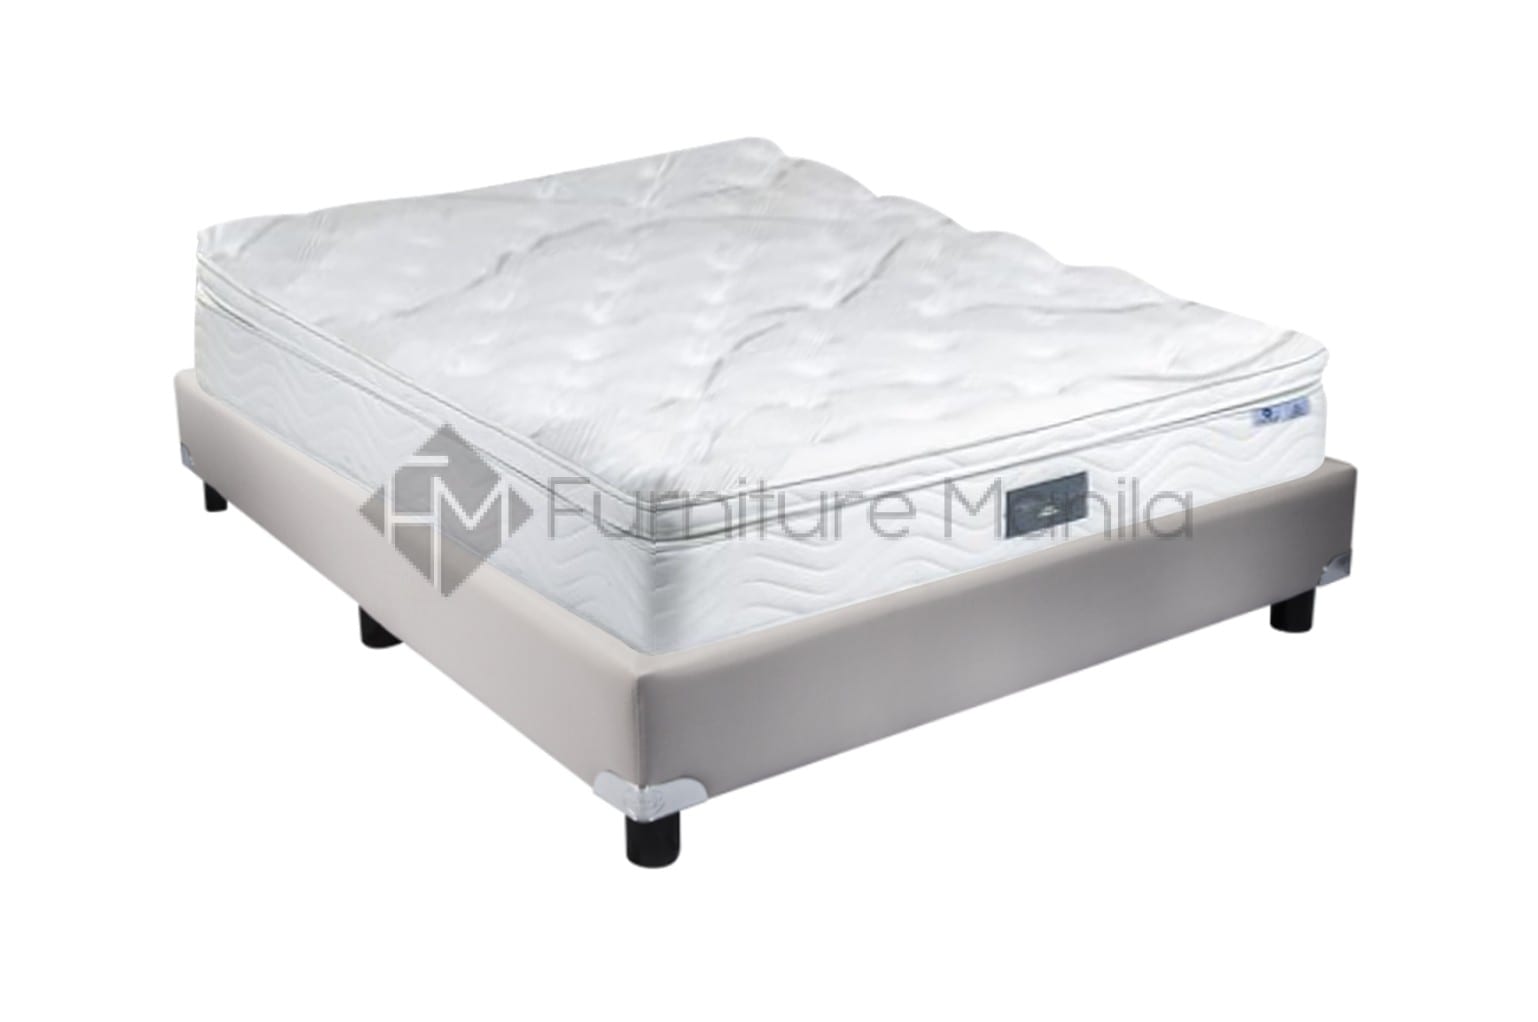 uratex premium mattress price list